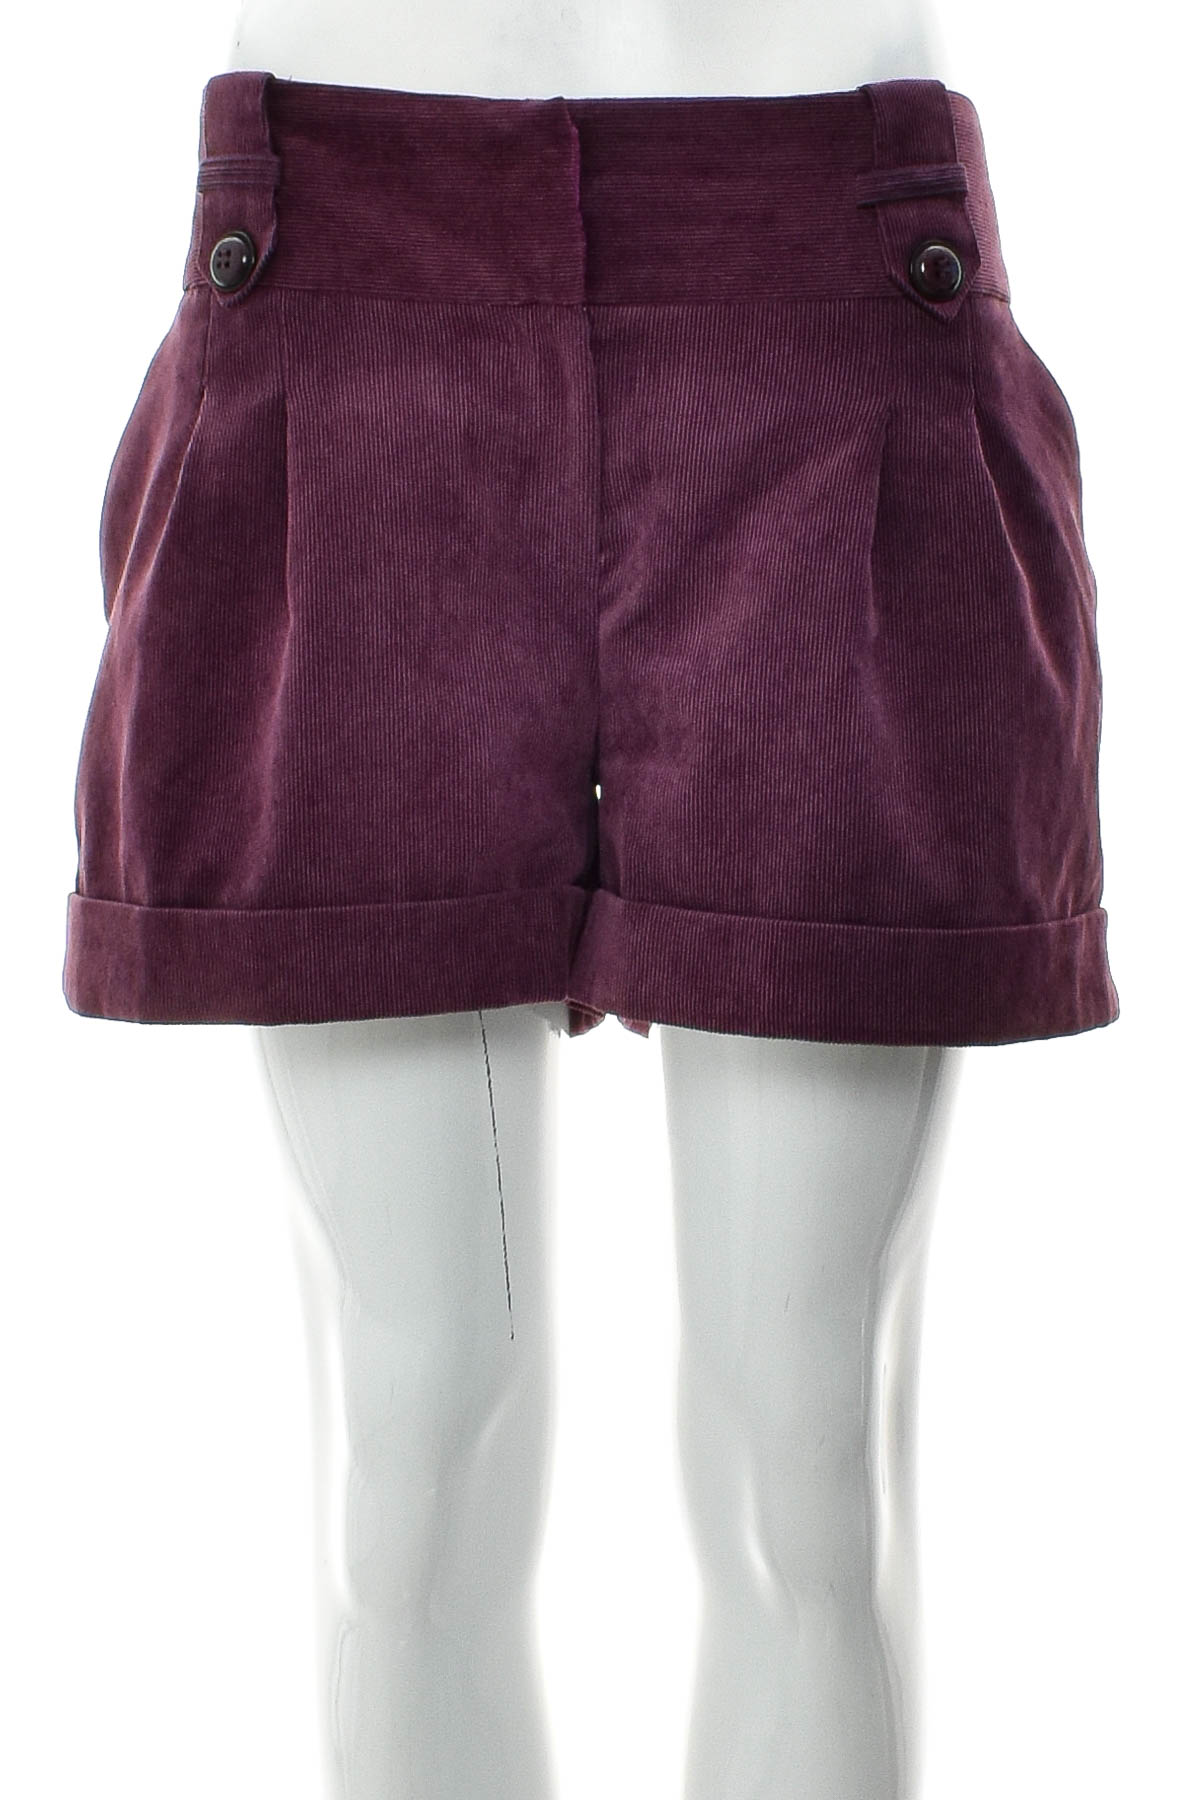 Female shorts - Orsay - 0